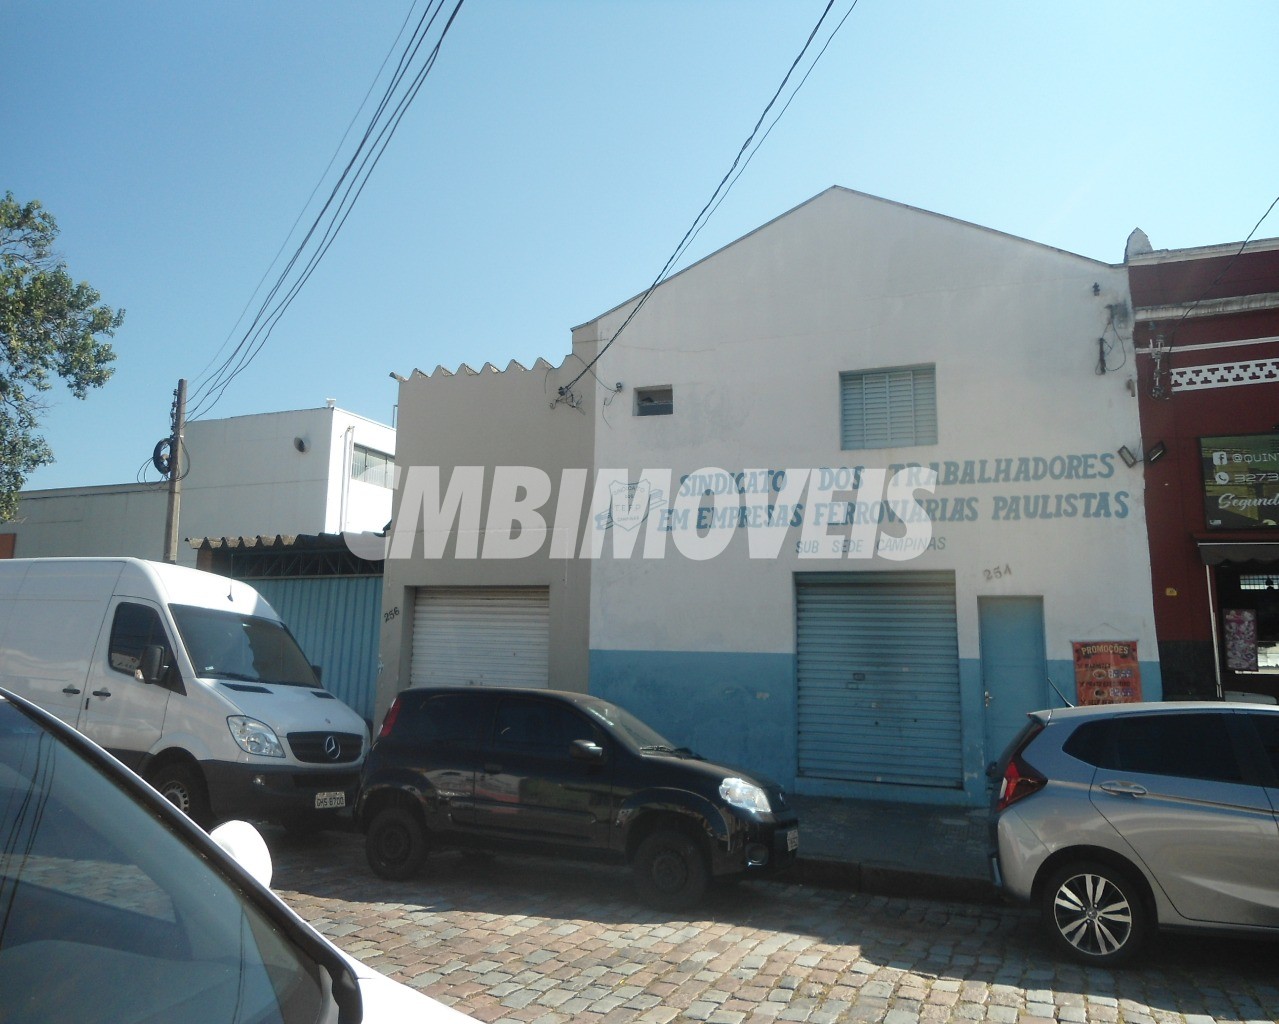 BA001818 | Barracão venda Vila Industrial | Campinas/SP